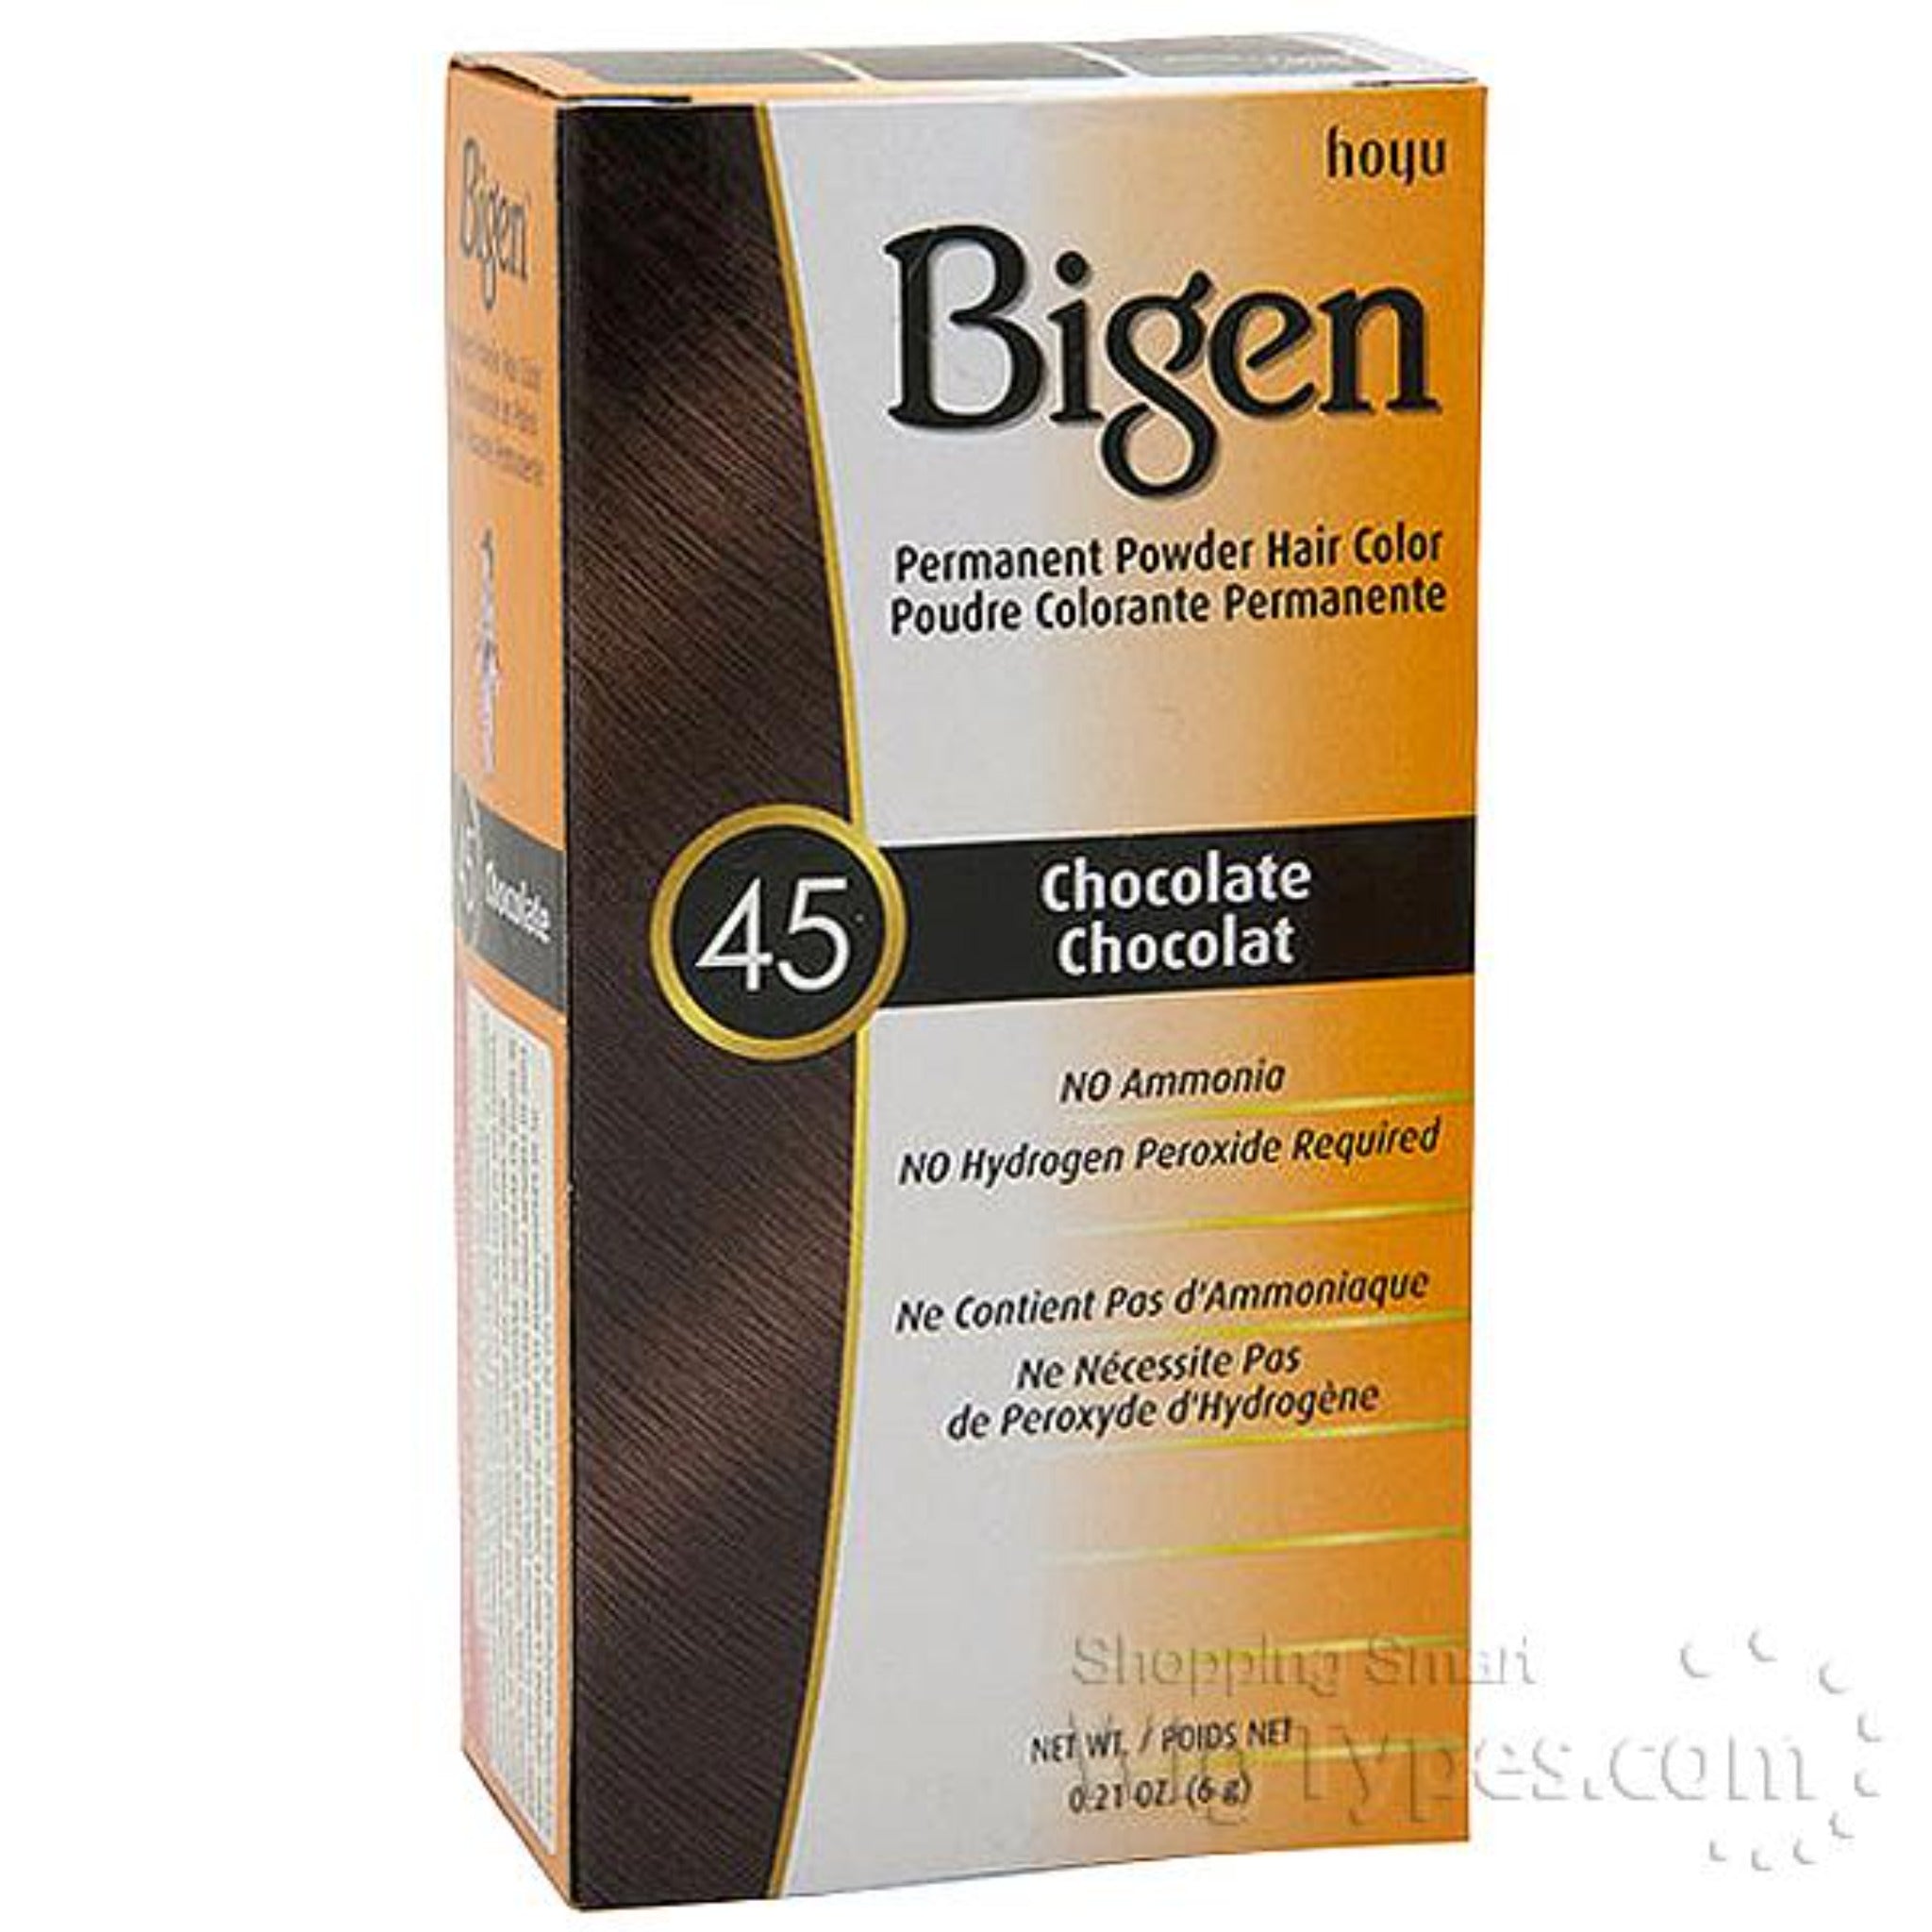 Bigen # 45 Chocolate